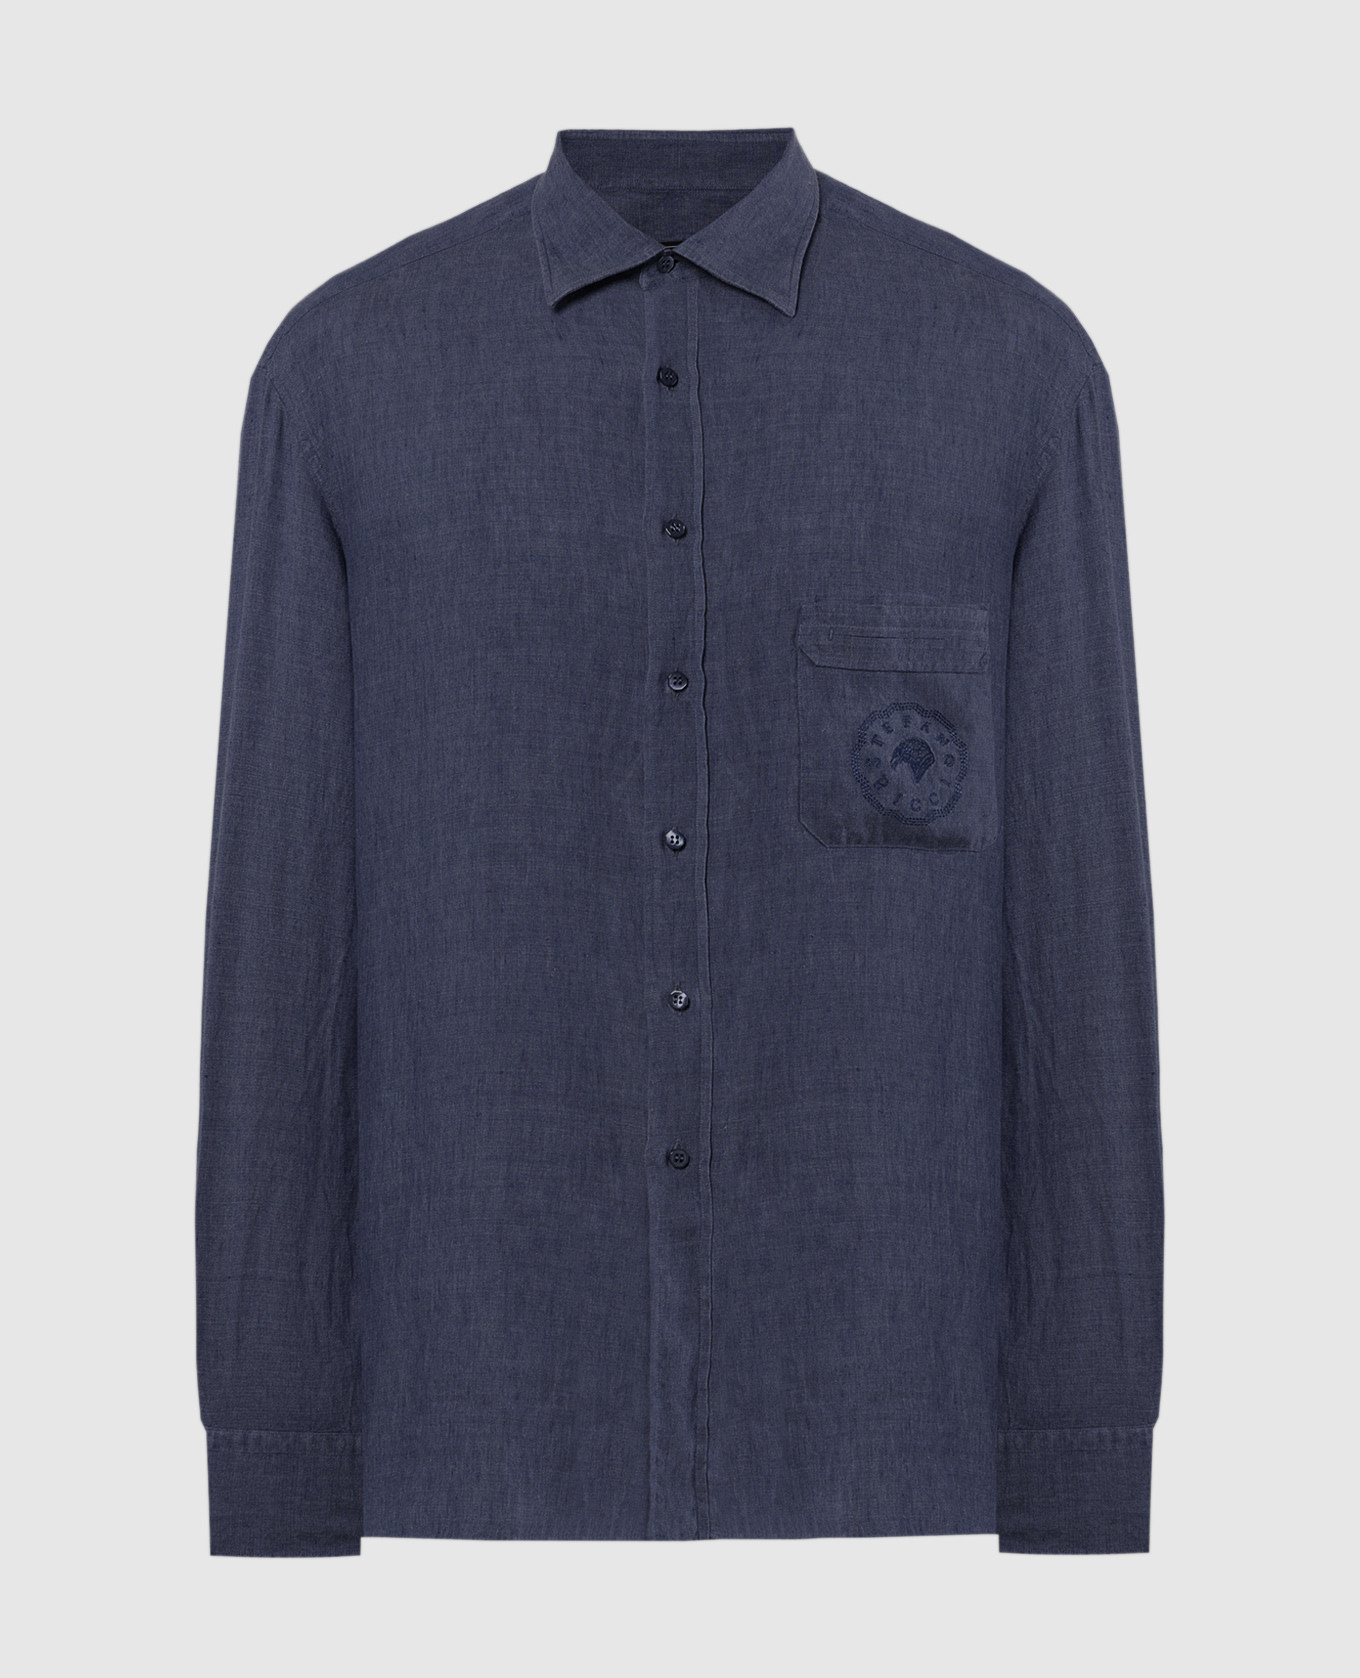 Blue linen shirt with logo emblem embroidery